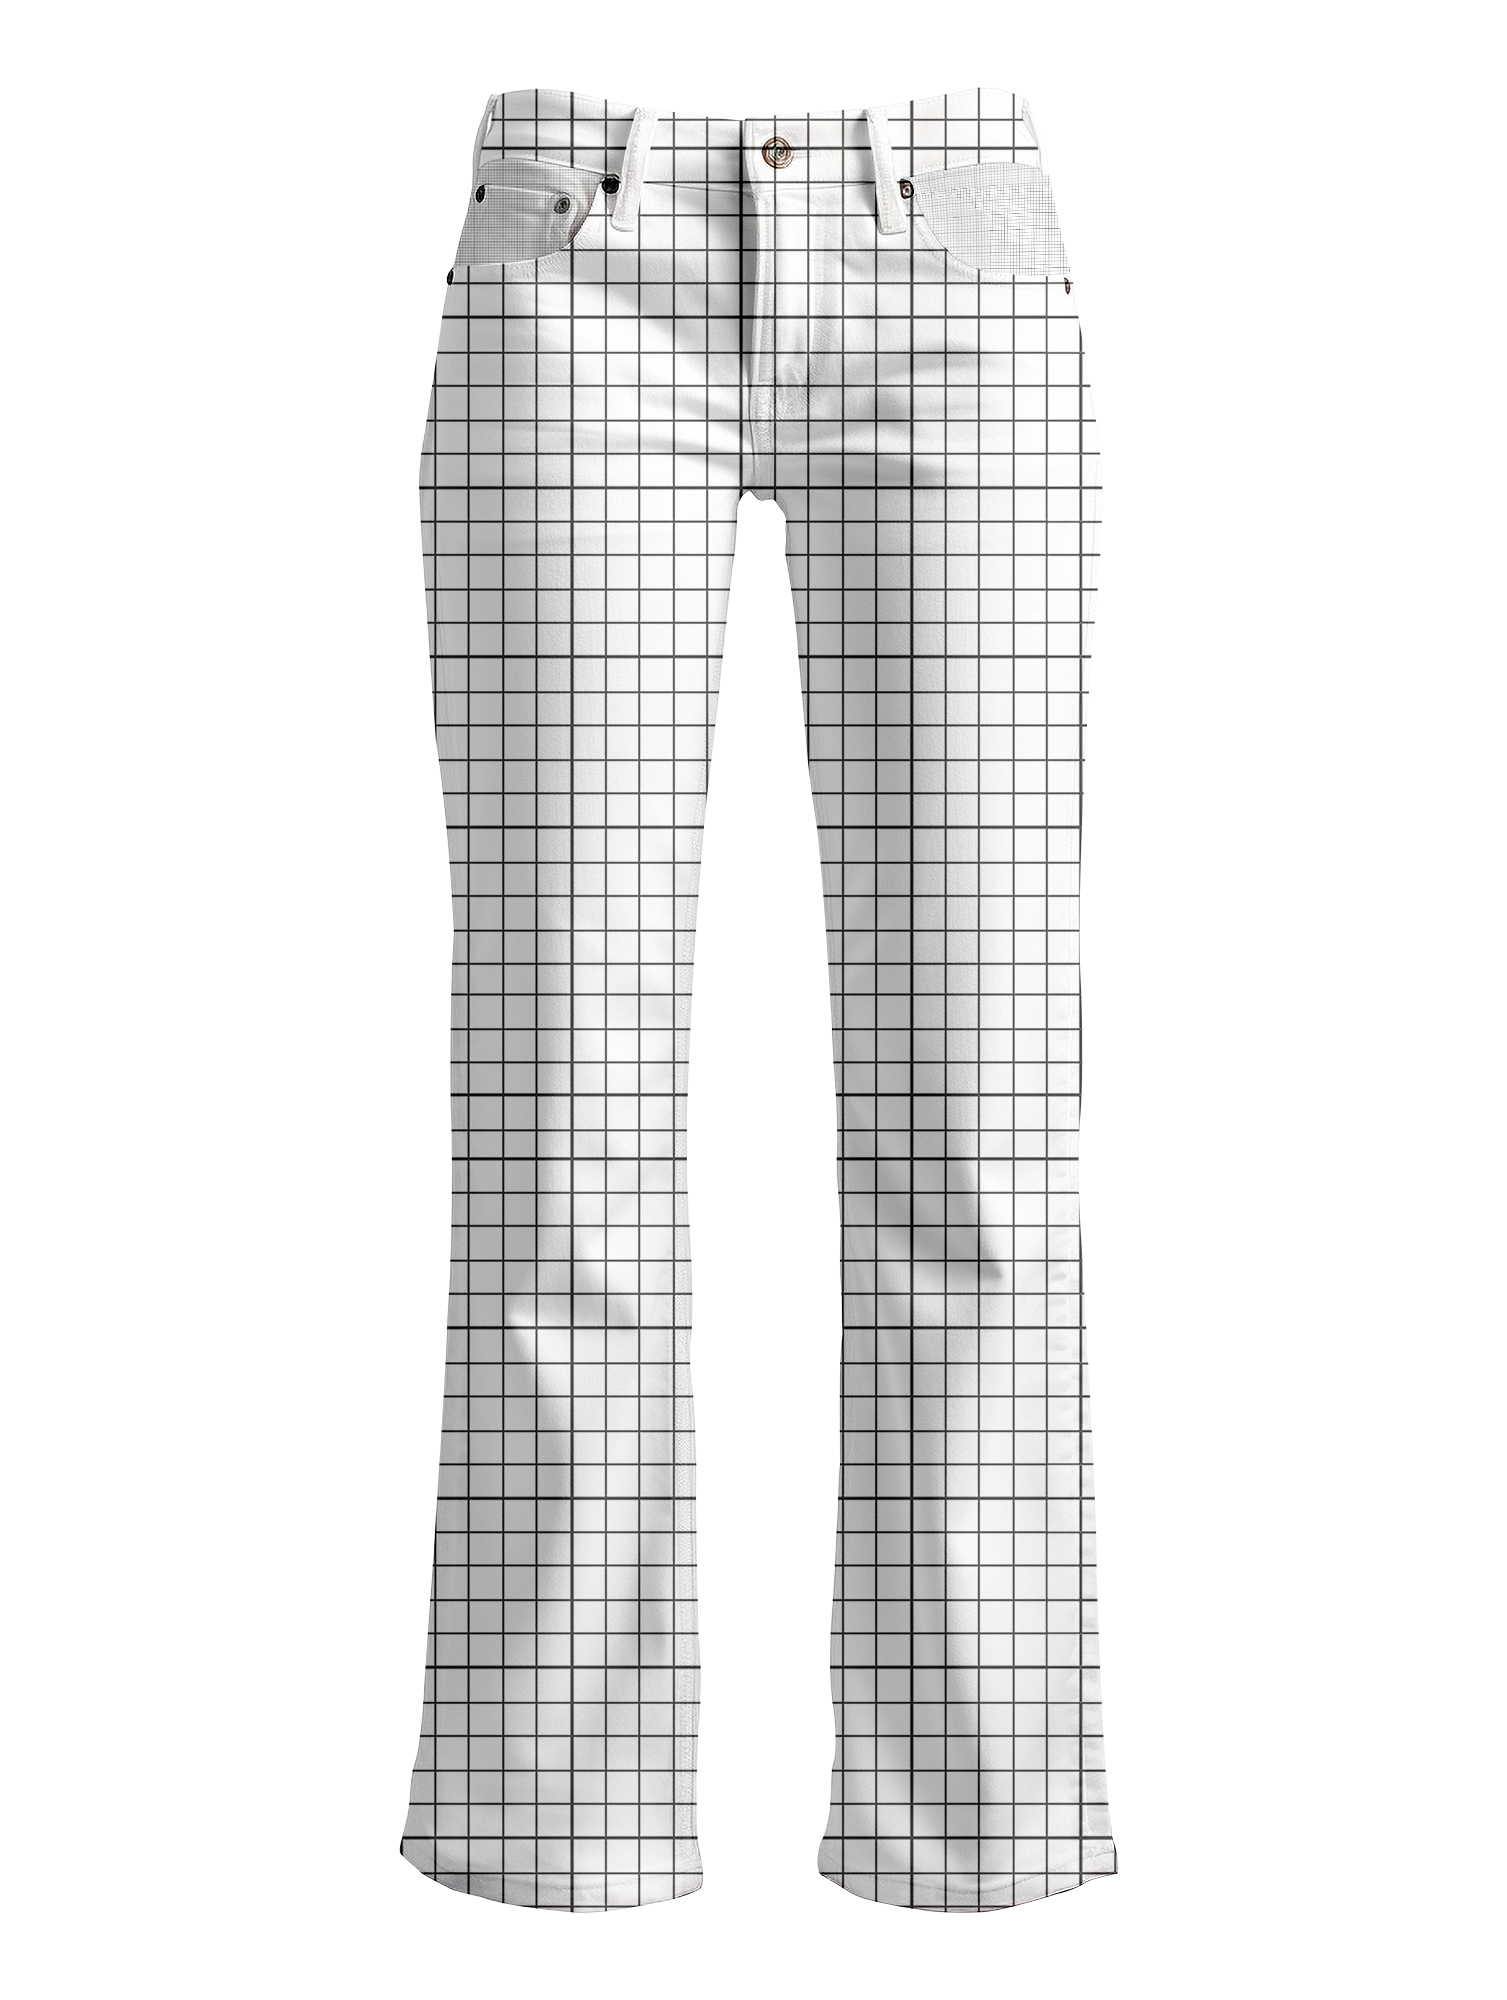 Free Download Women denim jeans mockup grid